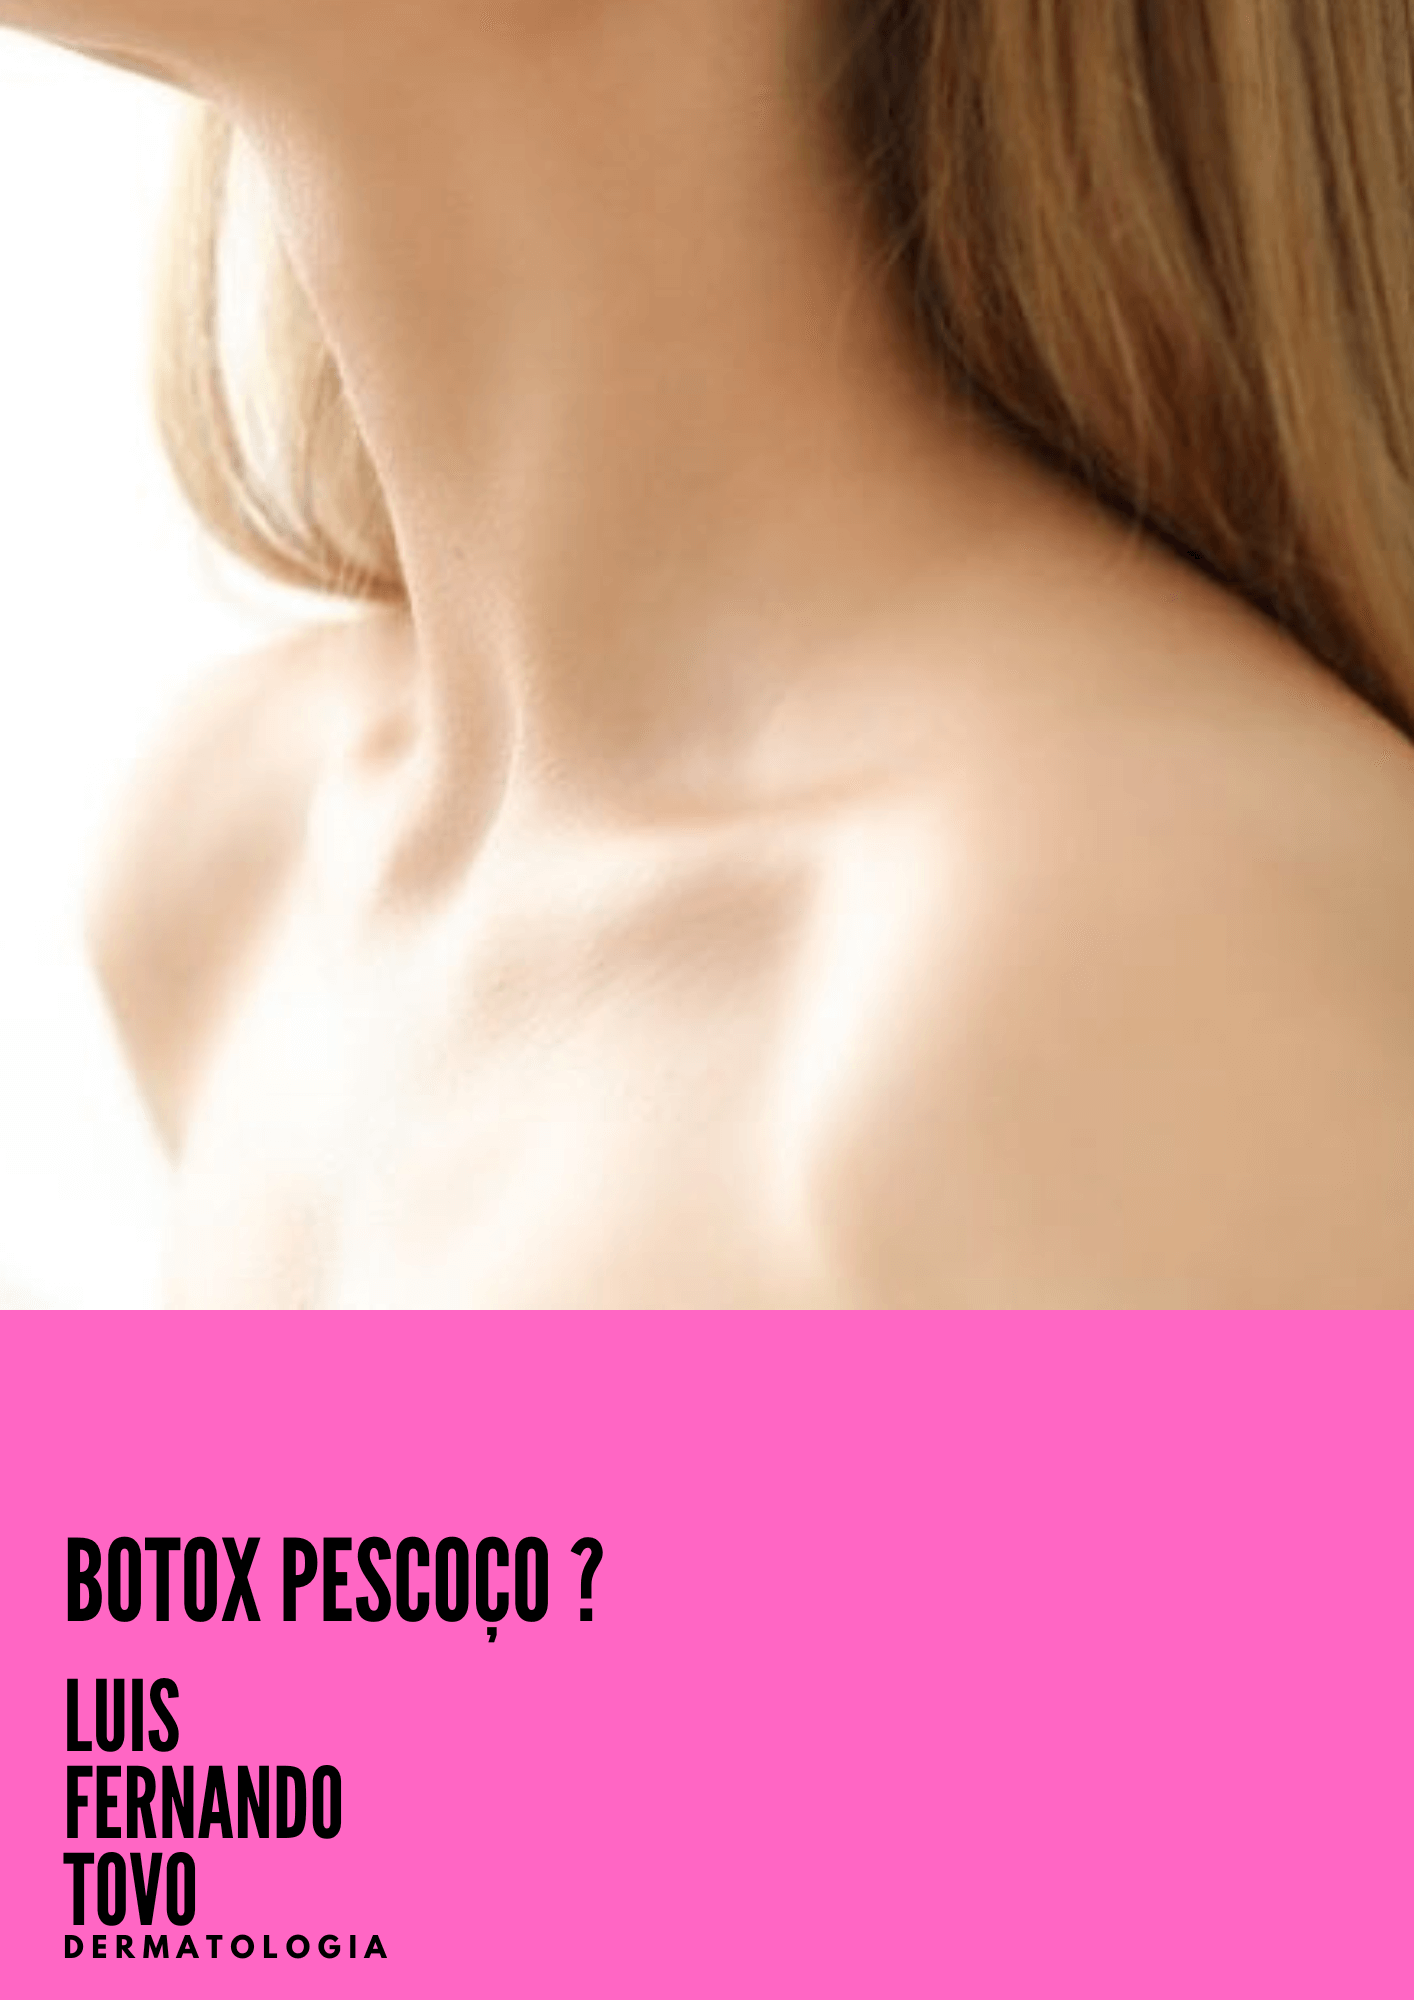 Barbie botox | toxina botunilica no pescoço para afinar? E seguro? dr tovo Luis Fernando Tovo